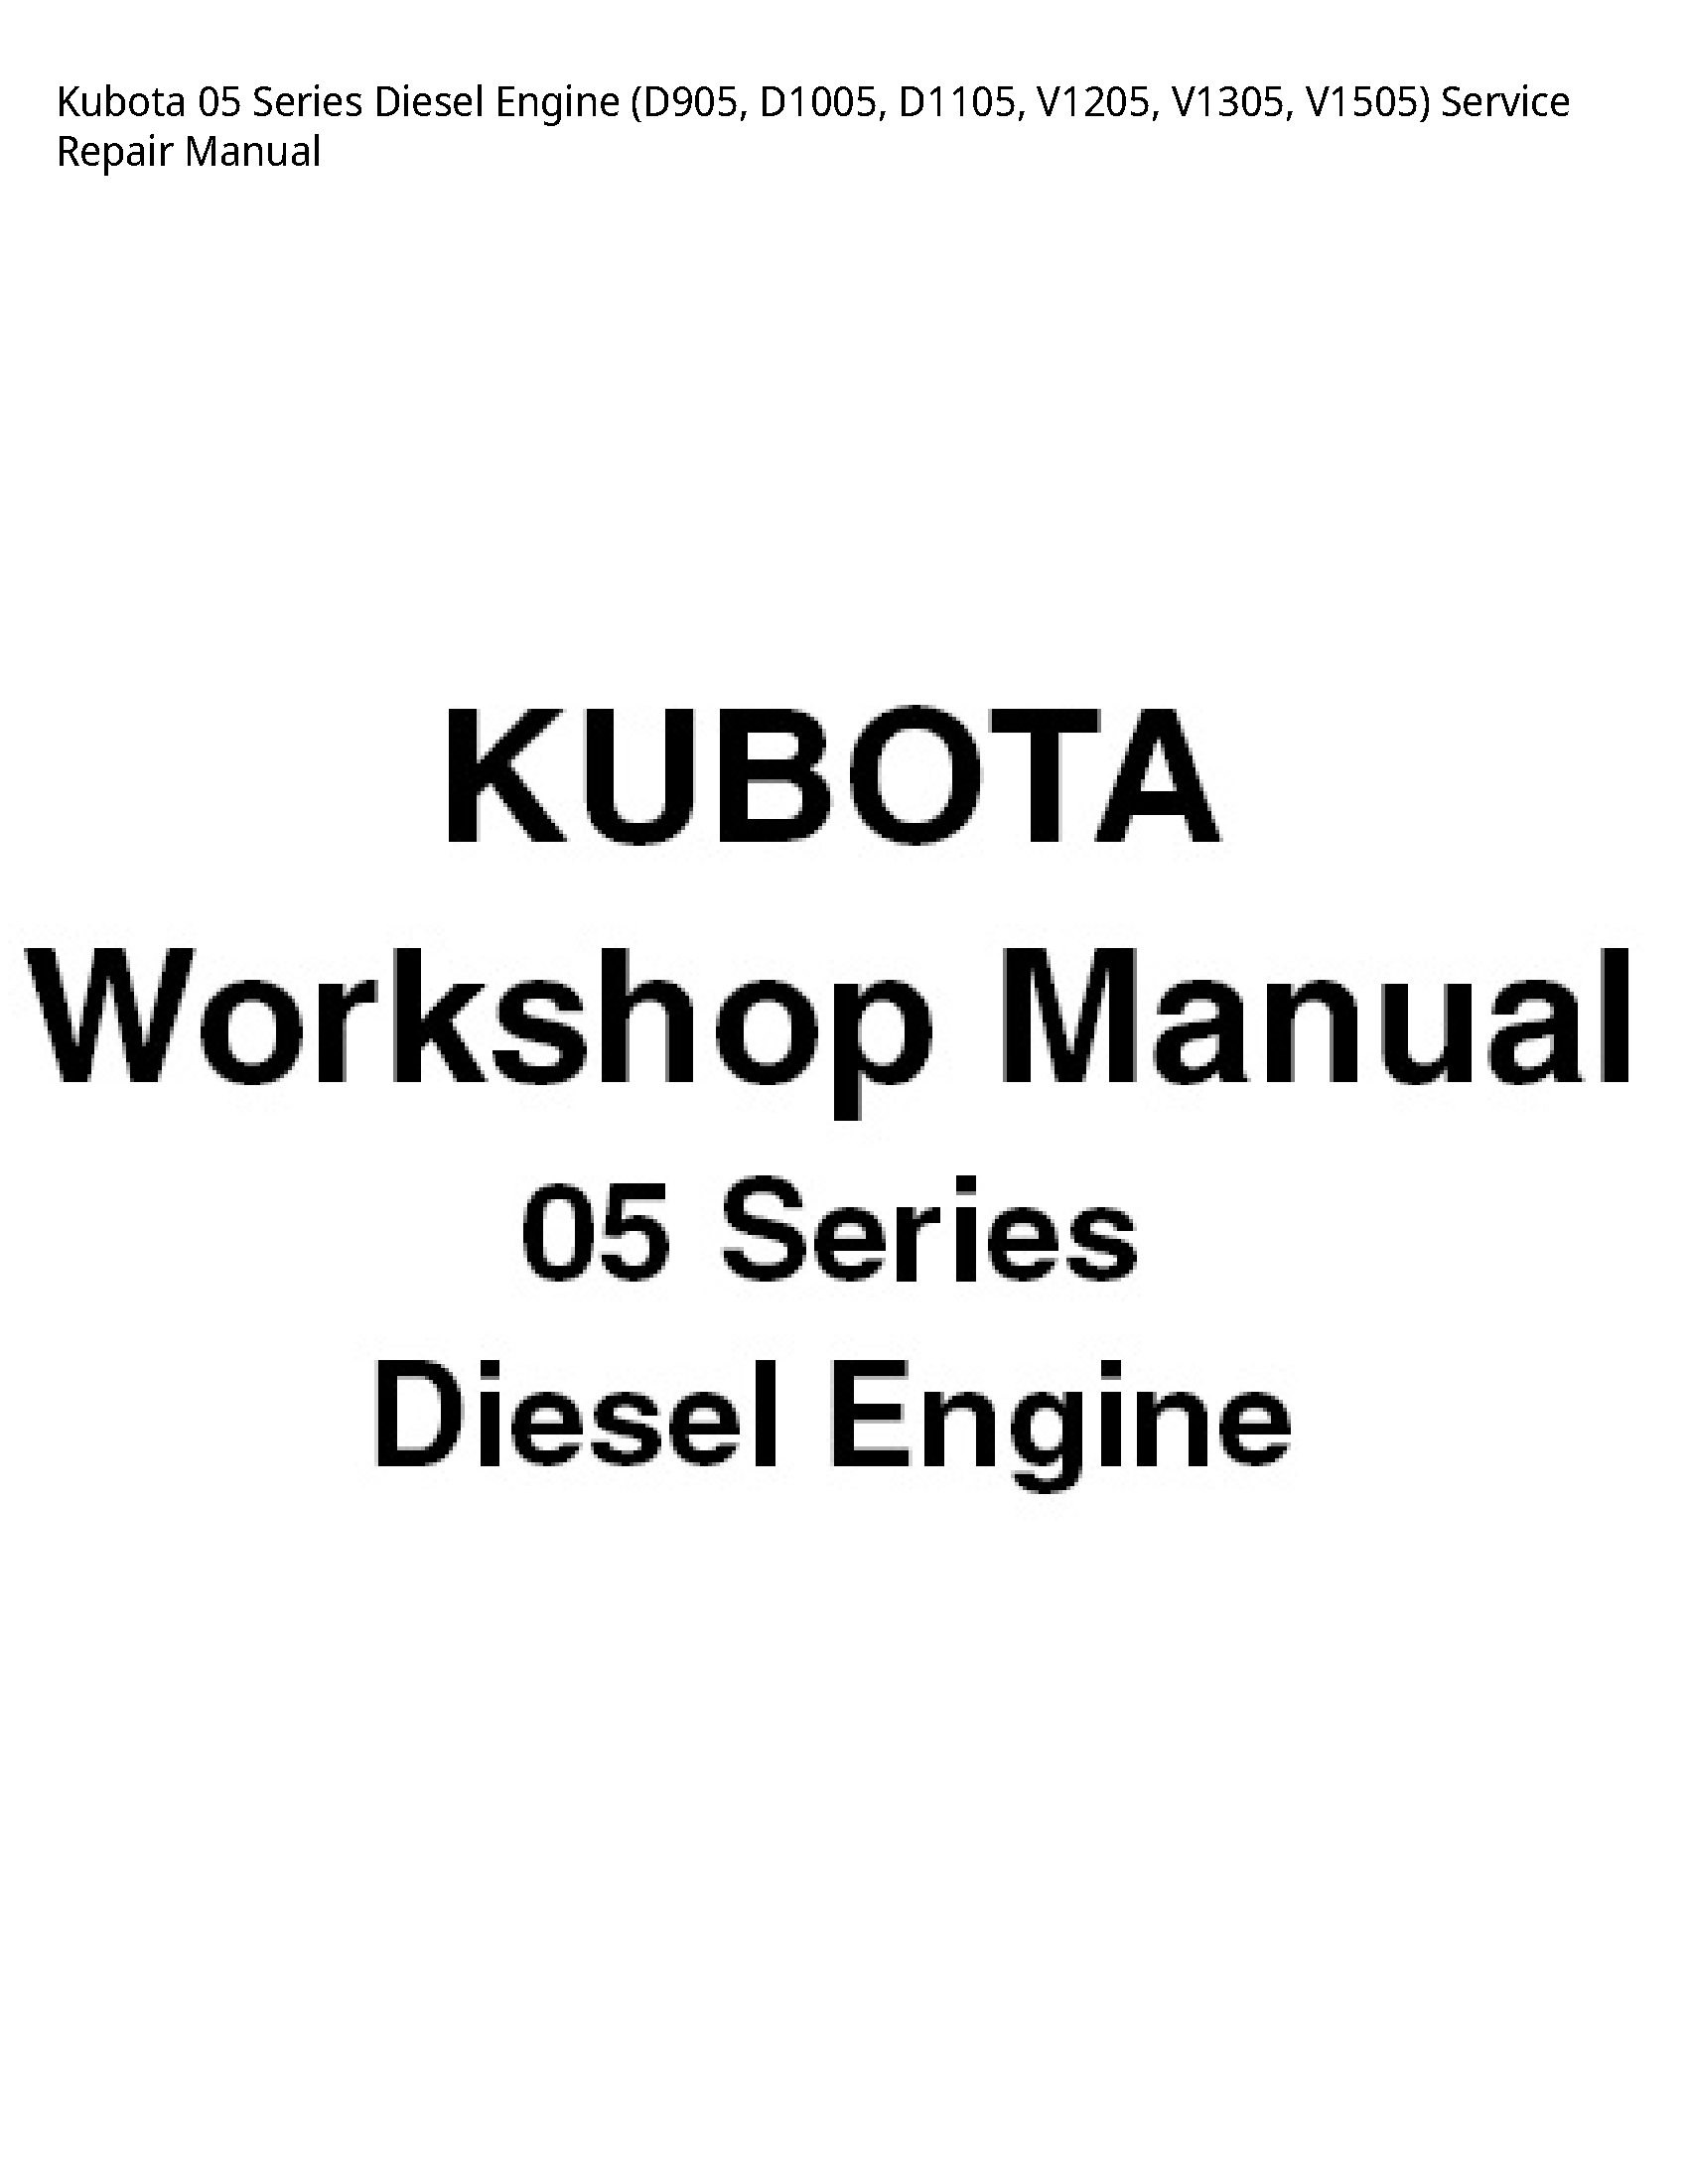 Kubota 05 Series Diesel Engine manual